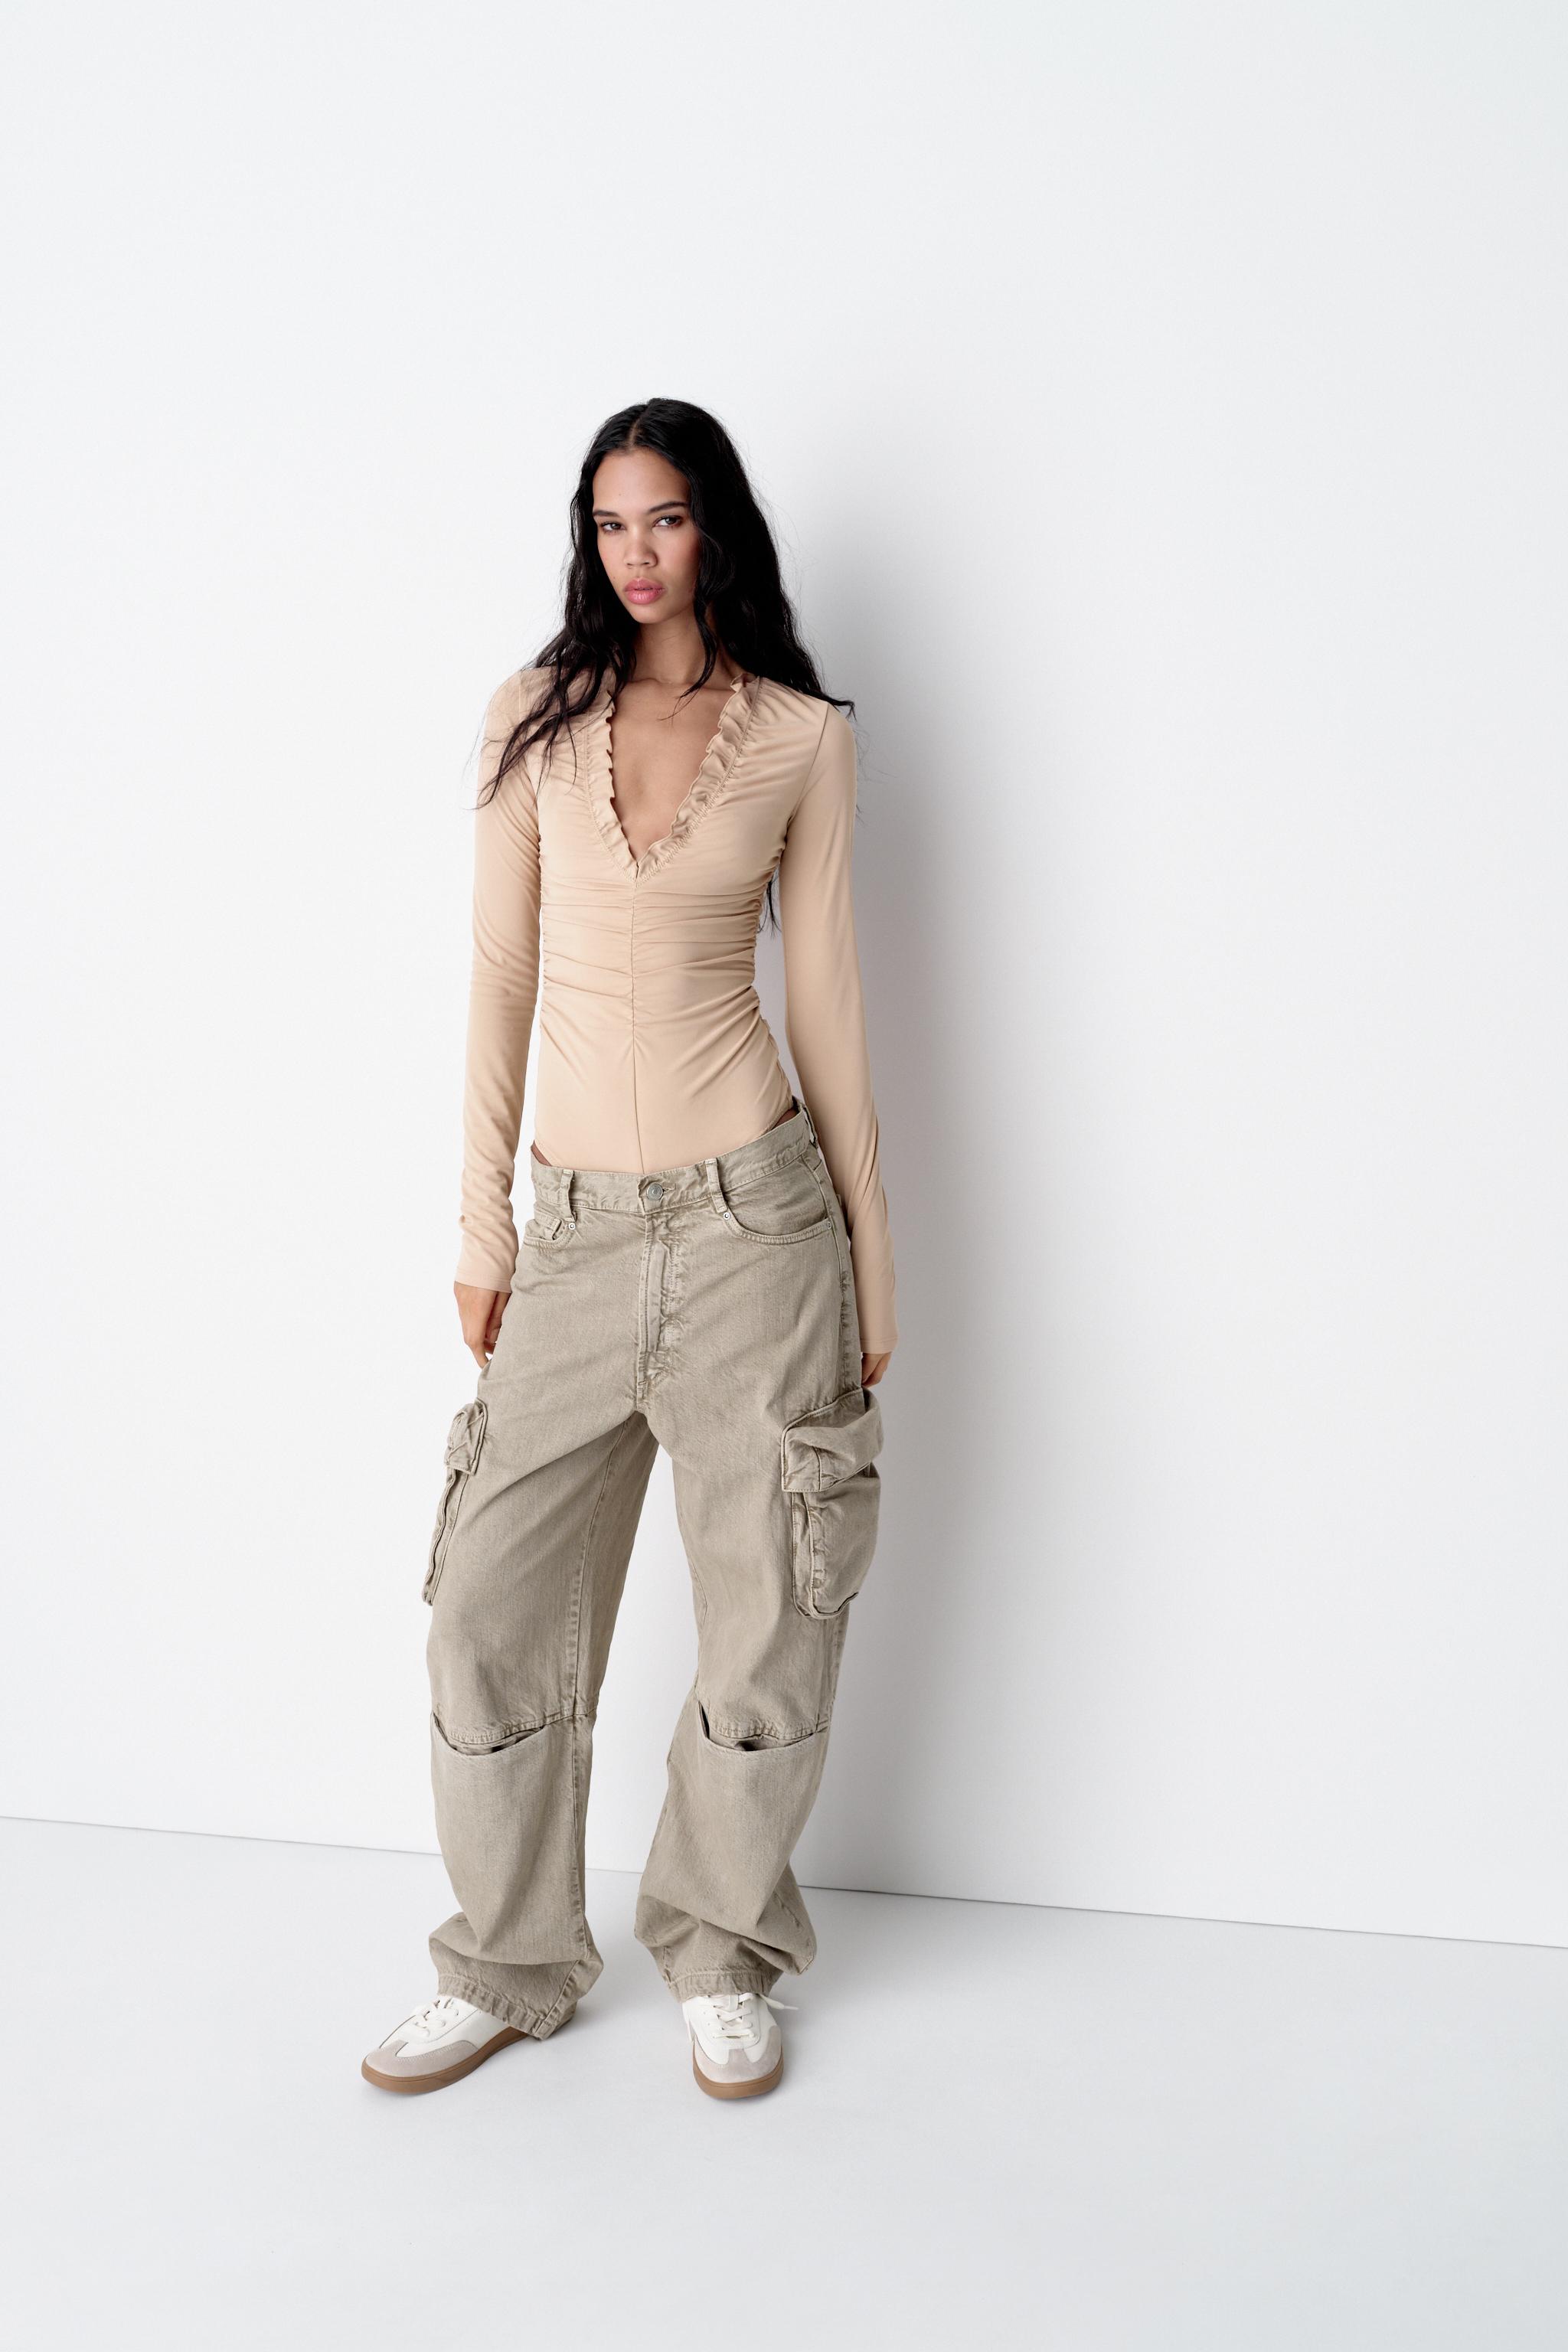 Women's Cargo Jeans, Explore our New Arrivals